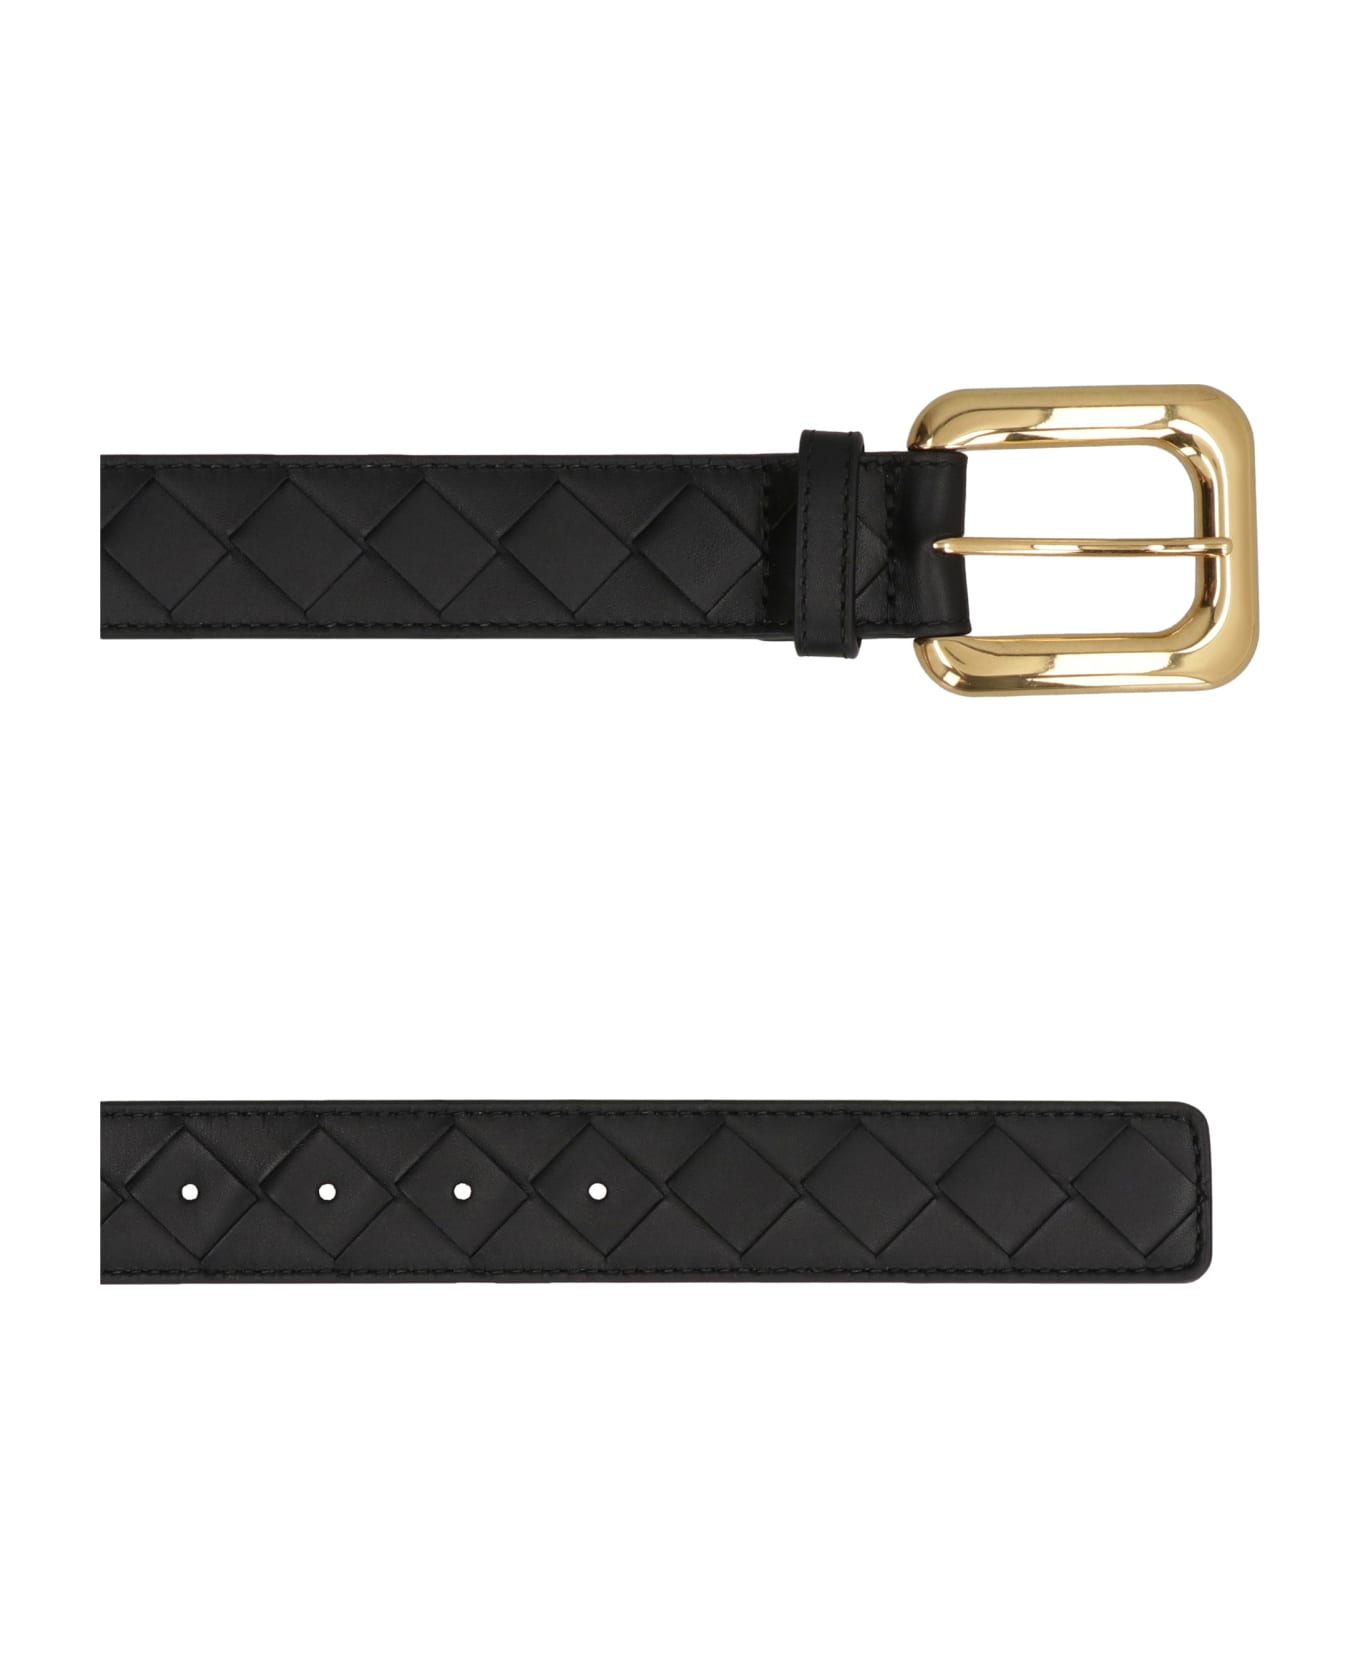 Bottega Veneta Leather Belt - black